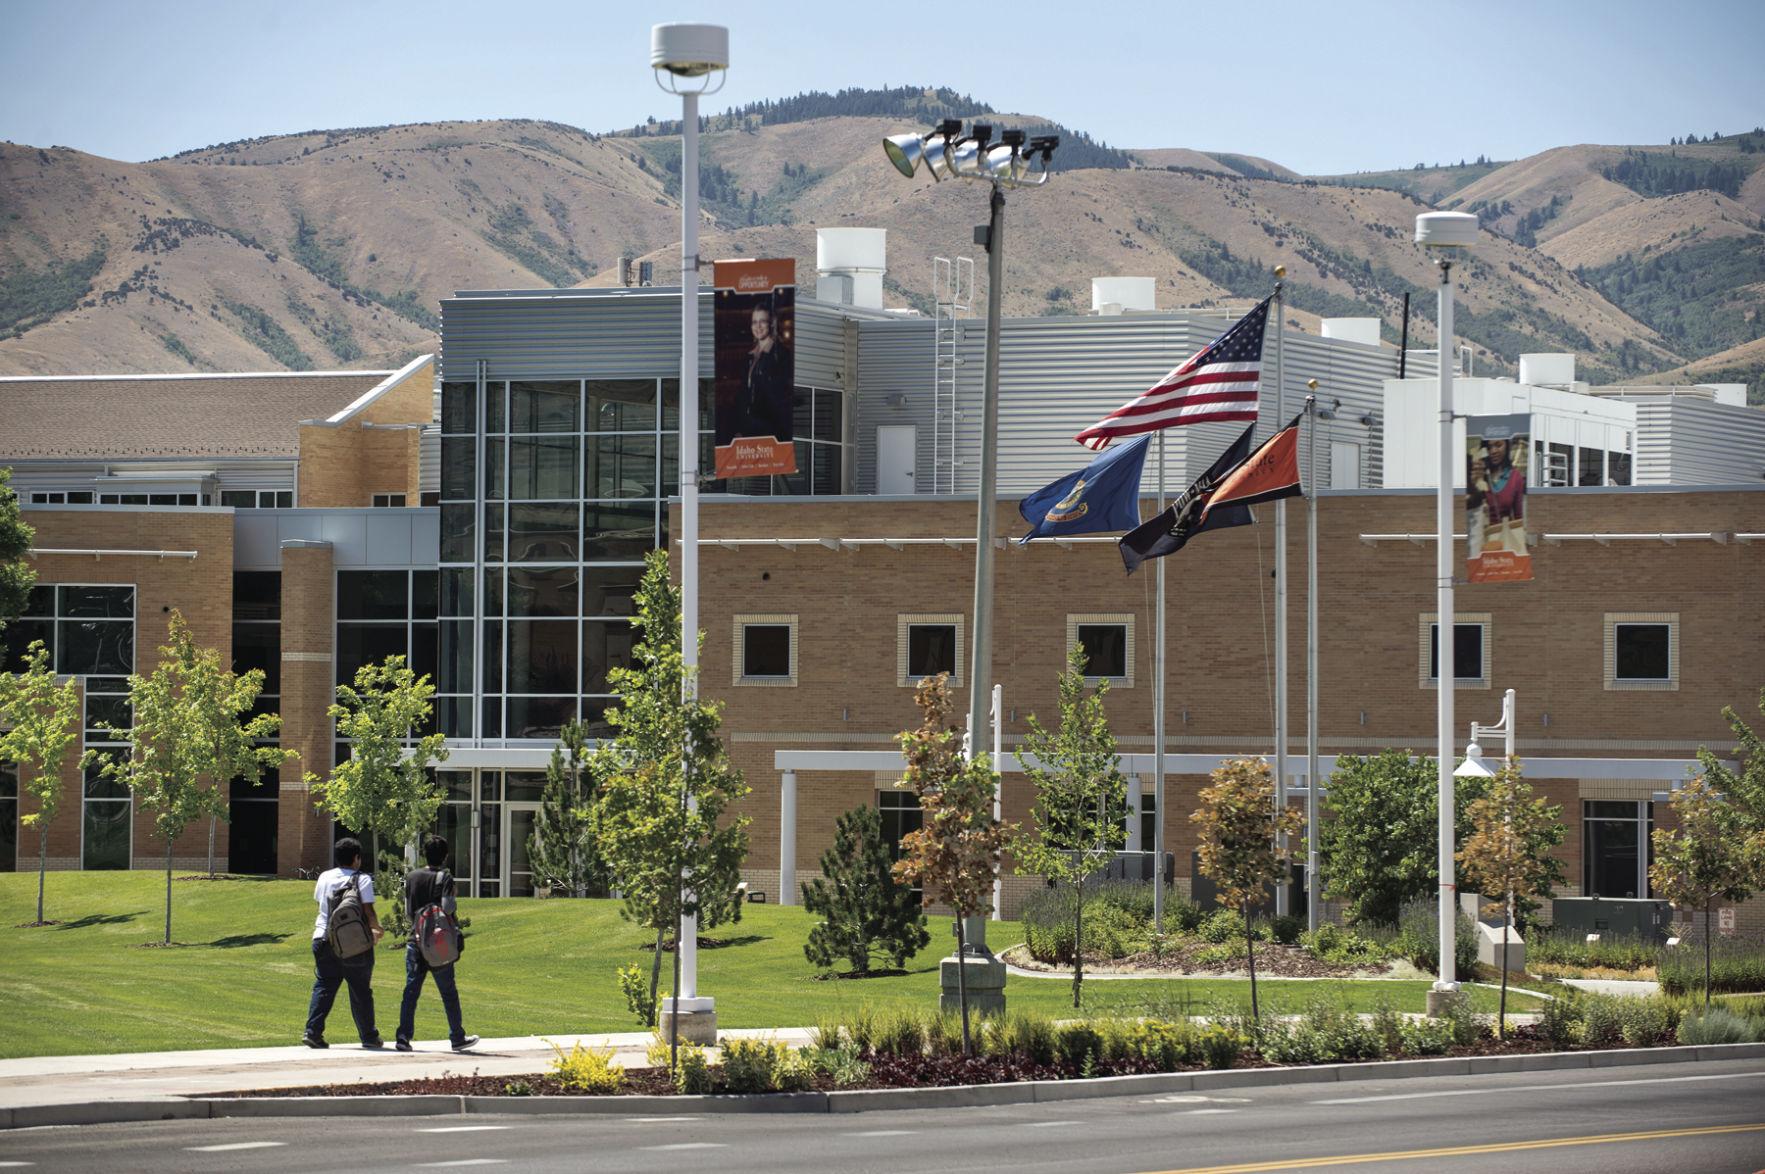 Would Idaho Falls community college help or hurt ISU? Education